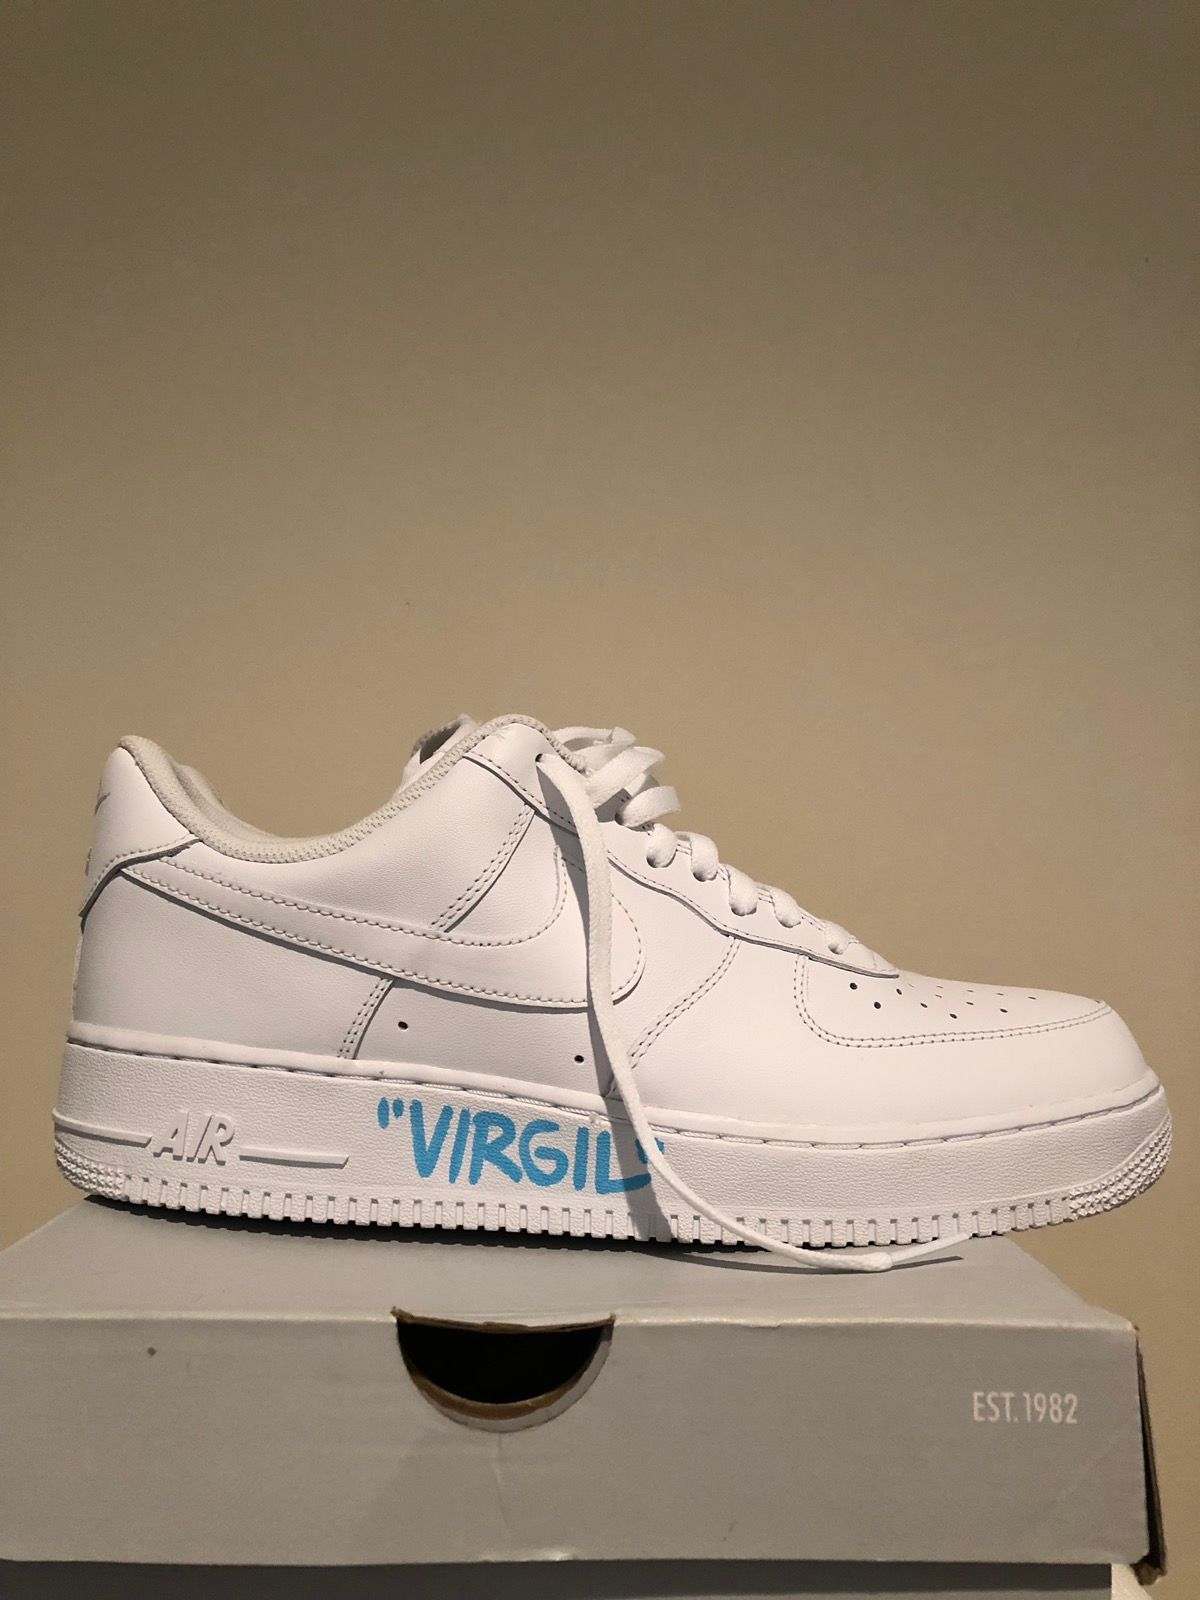 Nike Air Force 1 Ssense x Virgil Abloh signed by Virgil Abloh | Size 10